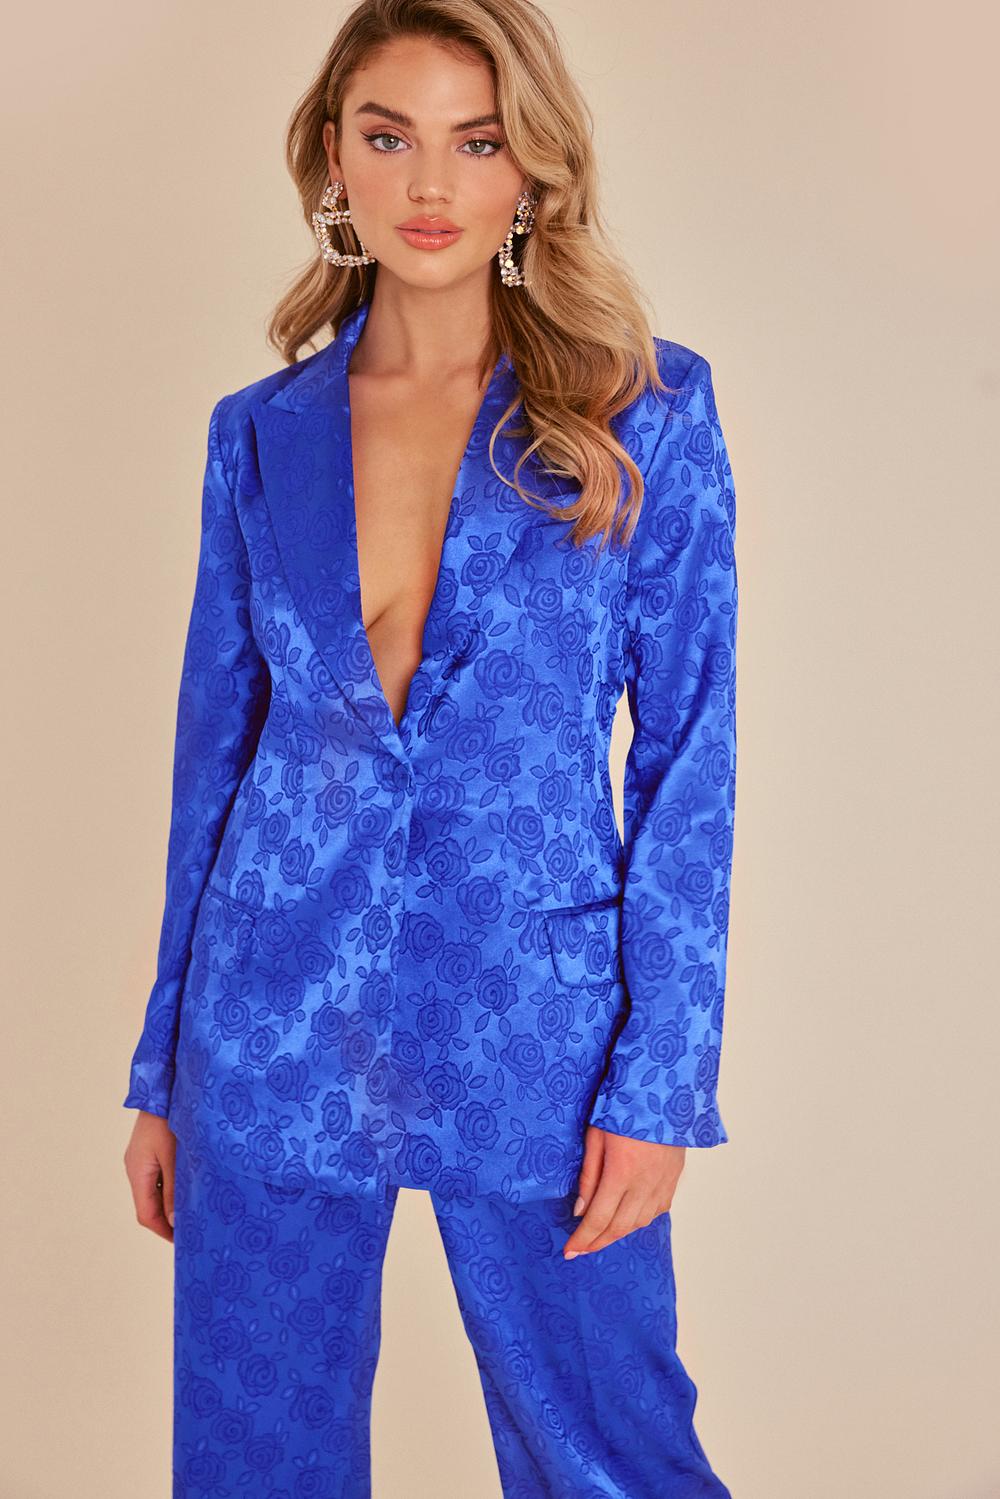 Blue blazer with jacquard fabric